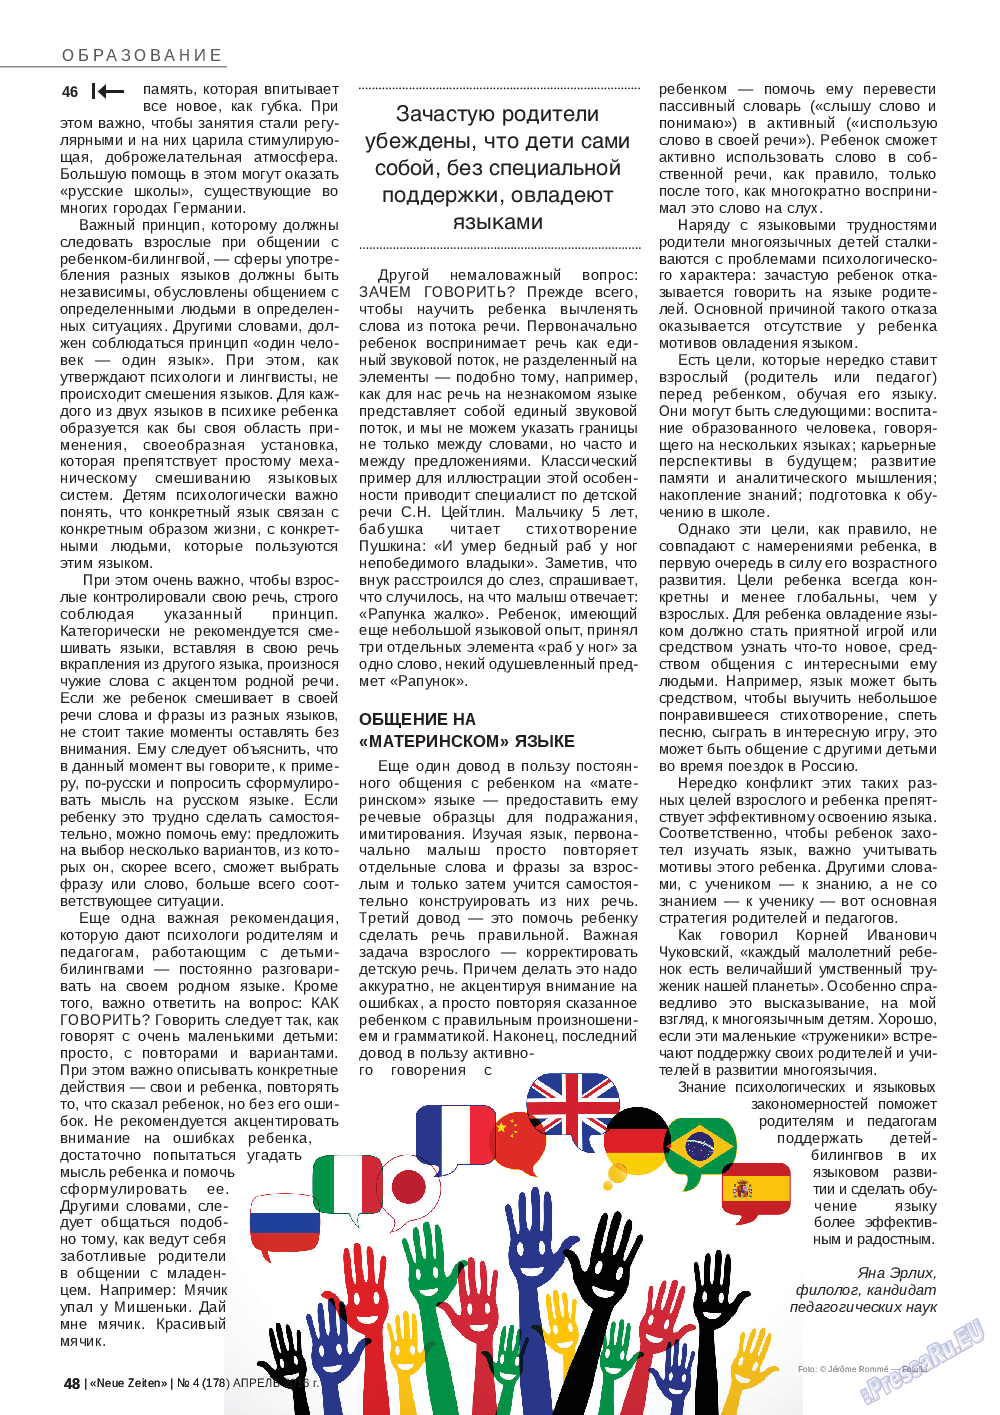 Neue Zeiten (журнал). 2016 год, номер 4, стр. 48